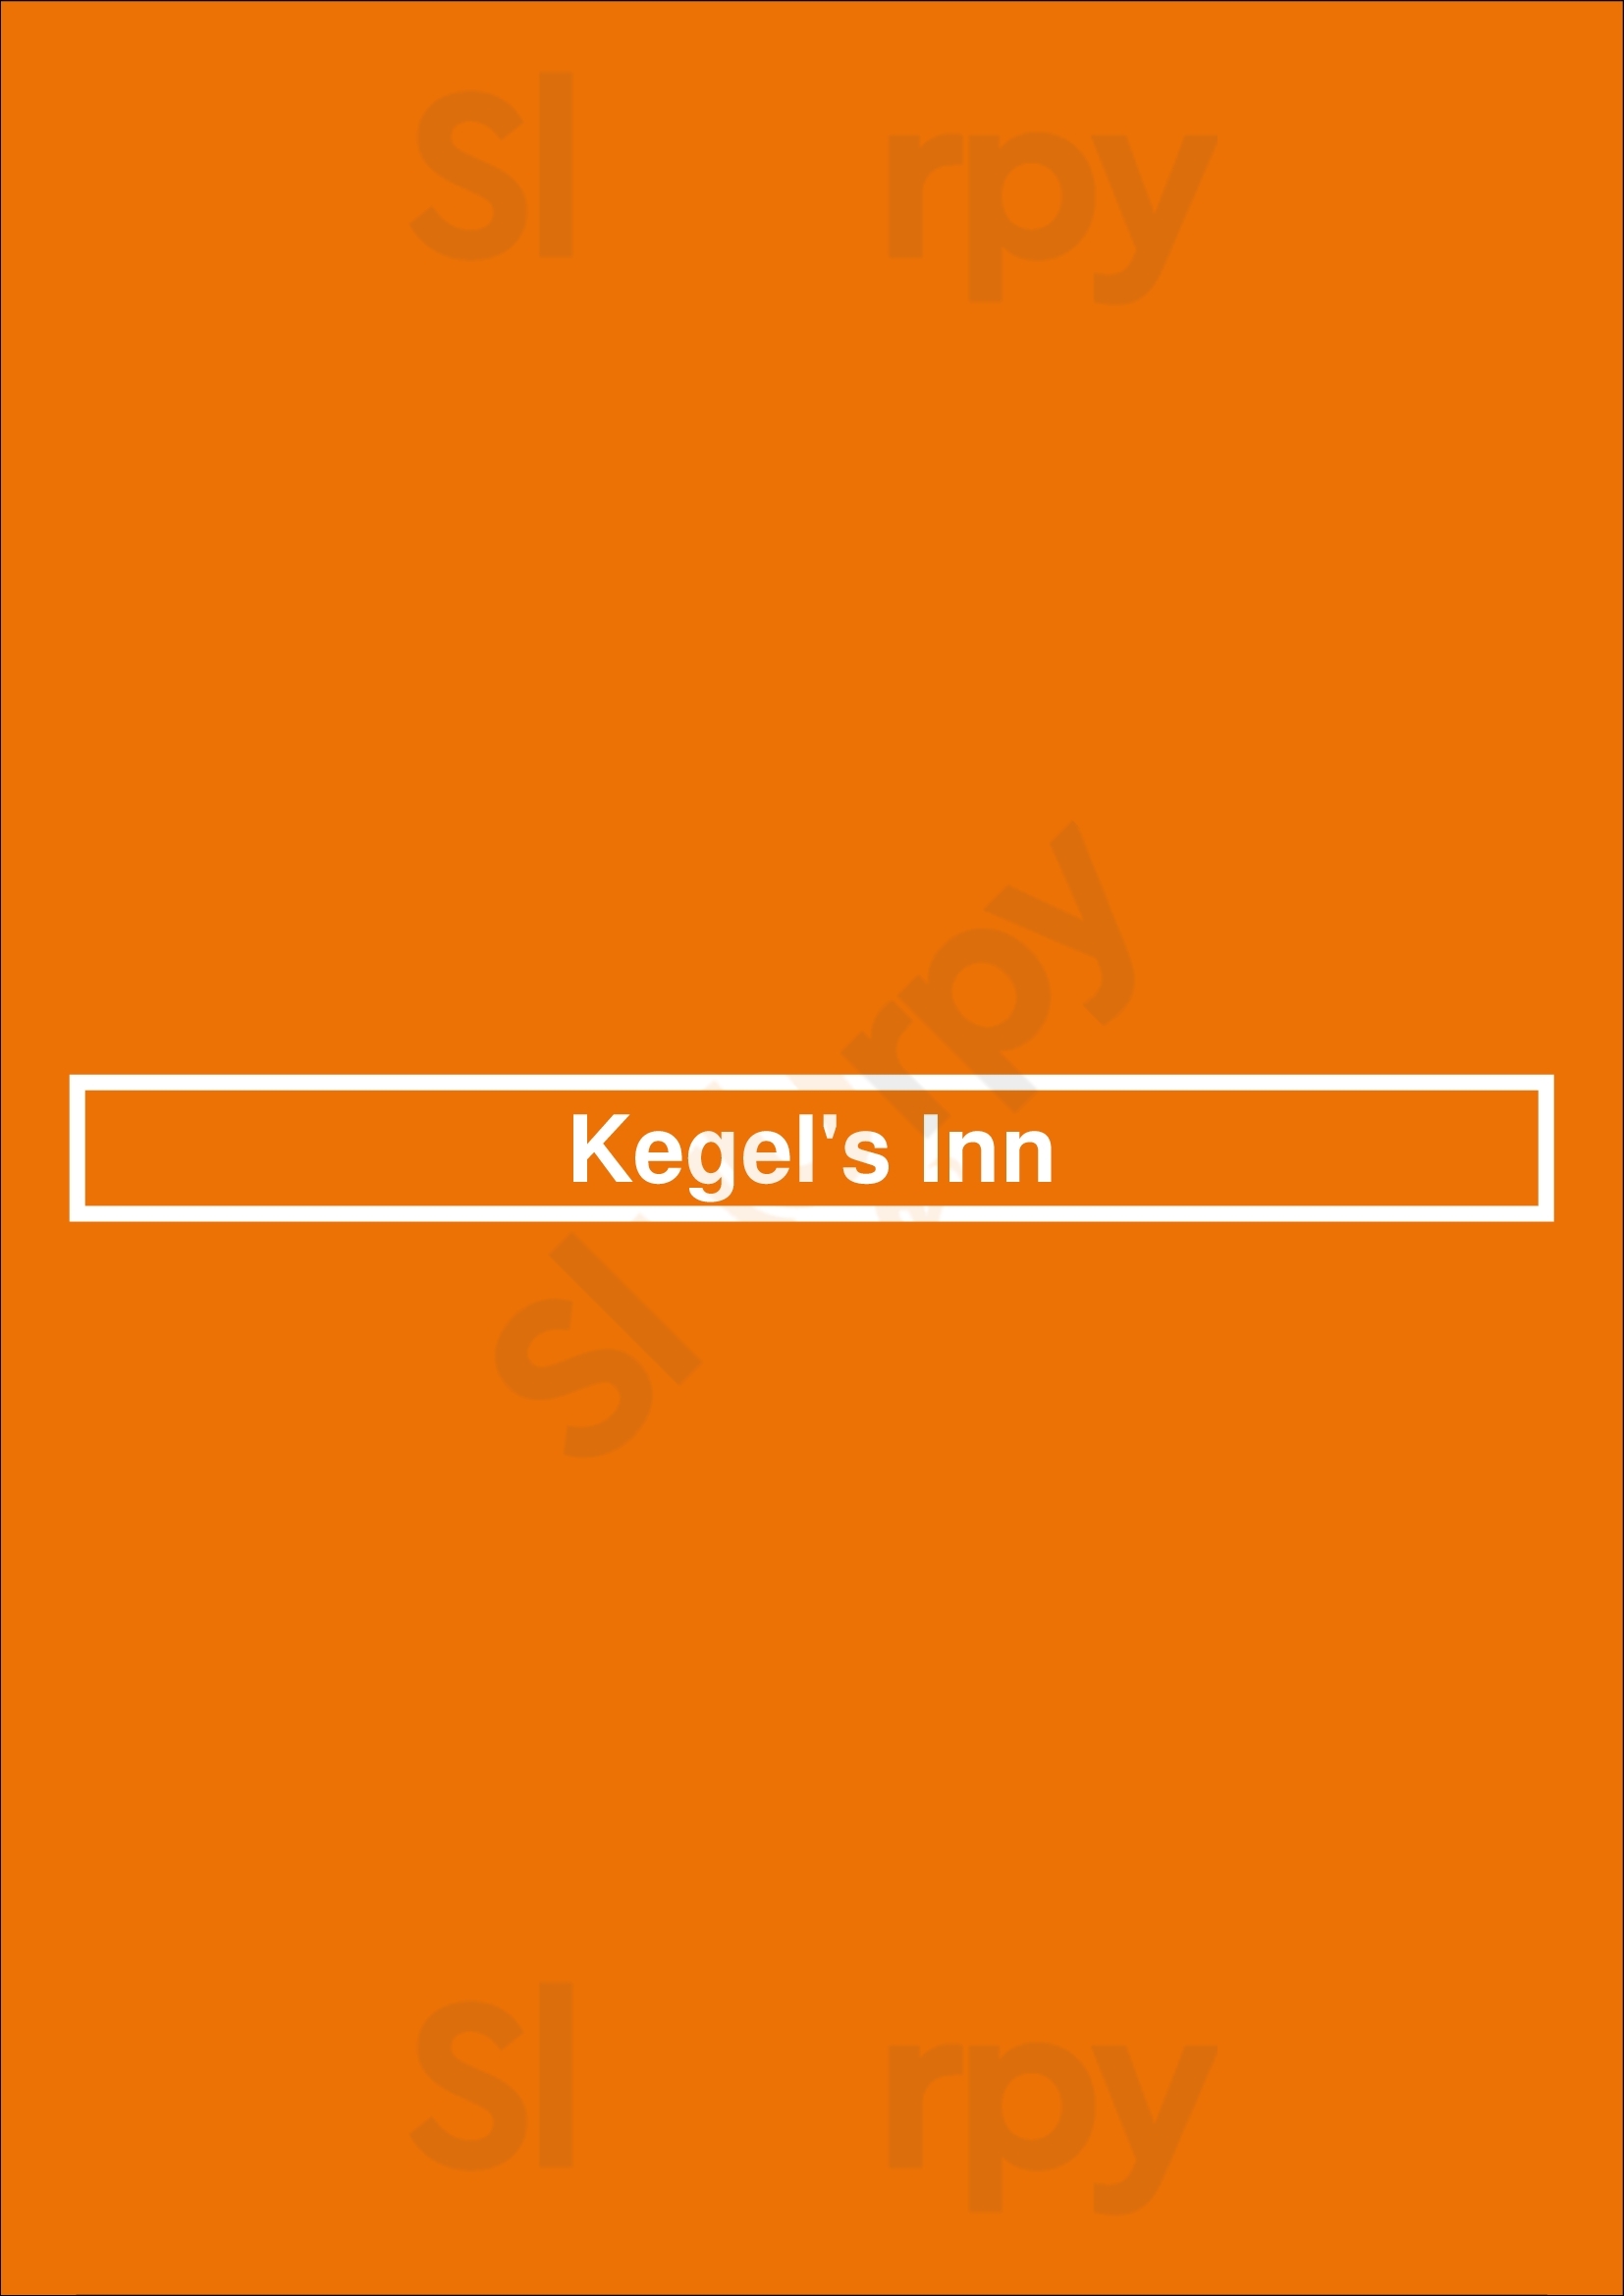 Kegel's Inn Milwaukee Menu - 1